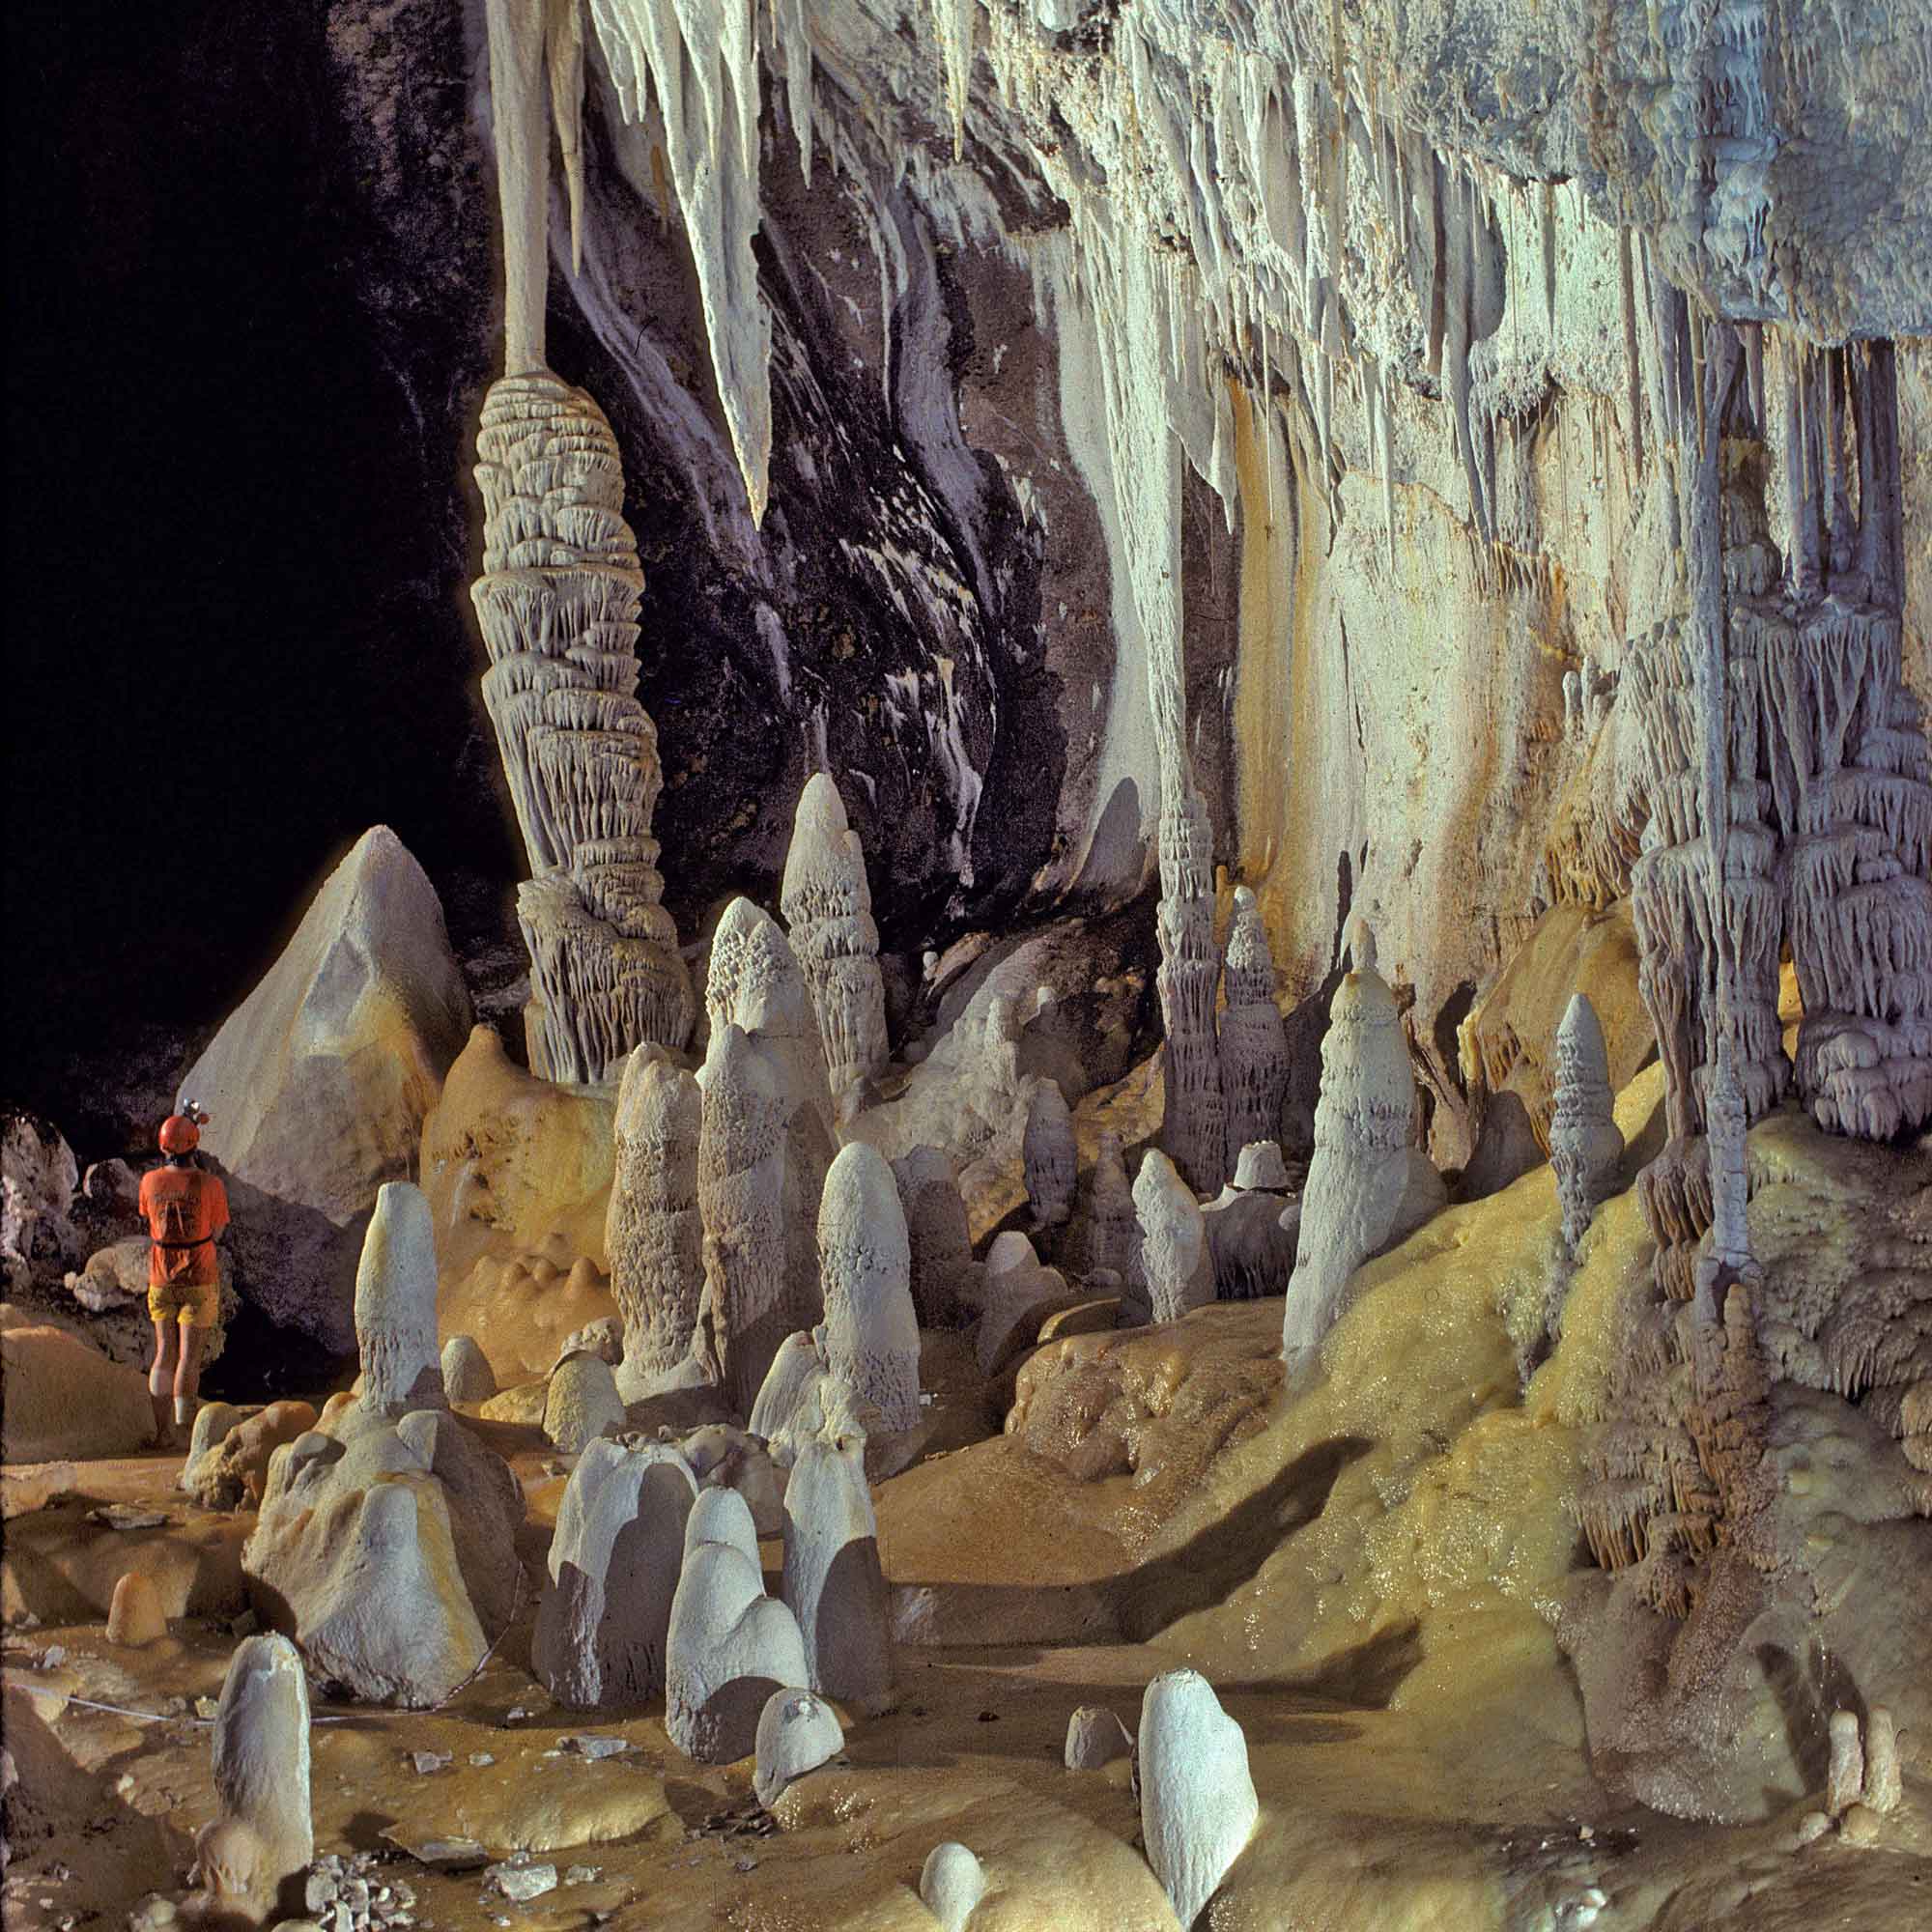 Photograph inside Lechuguilla Cave, New Mexico.